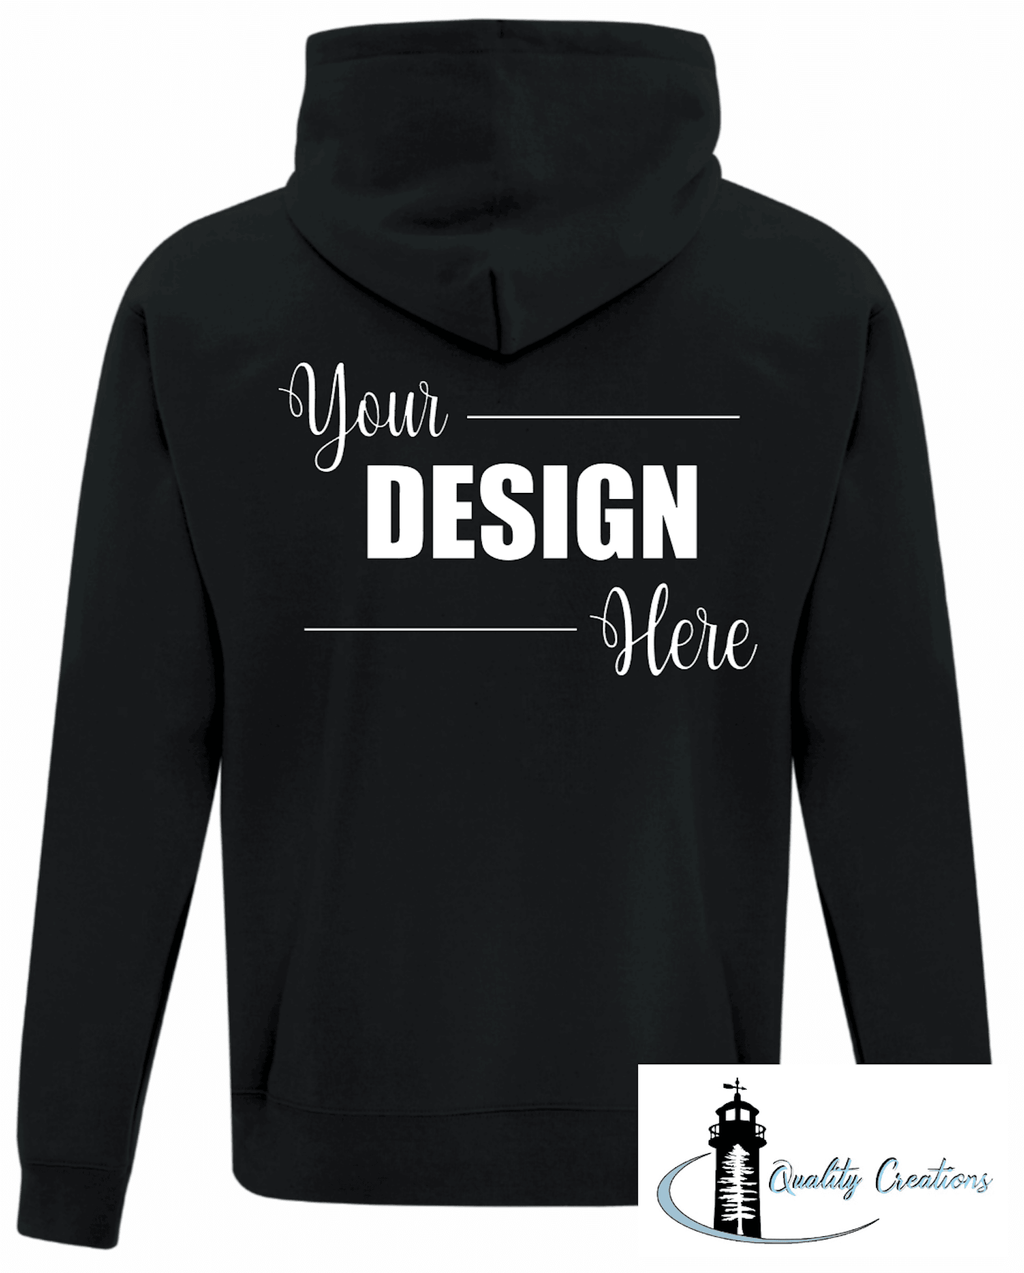 custom your design here personalized hoodie Newbrunswick salisbury wonton canada quality creations